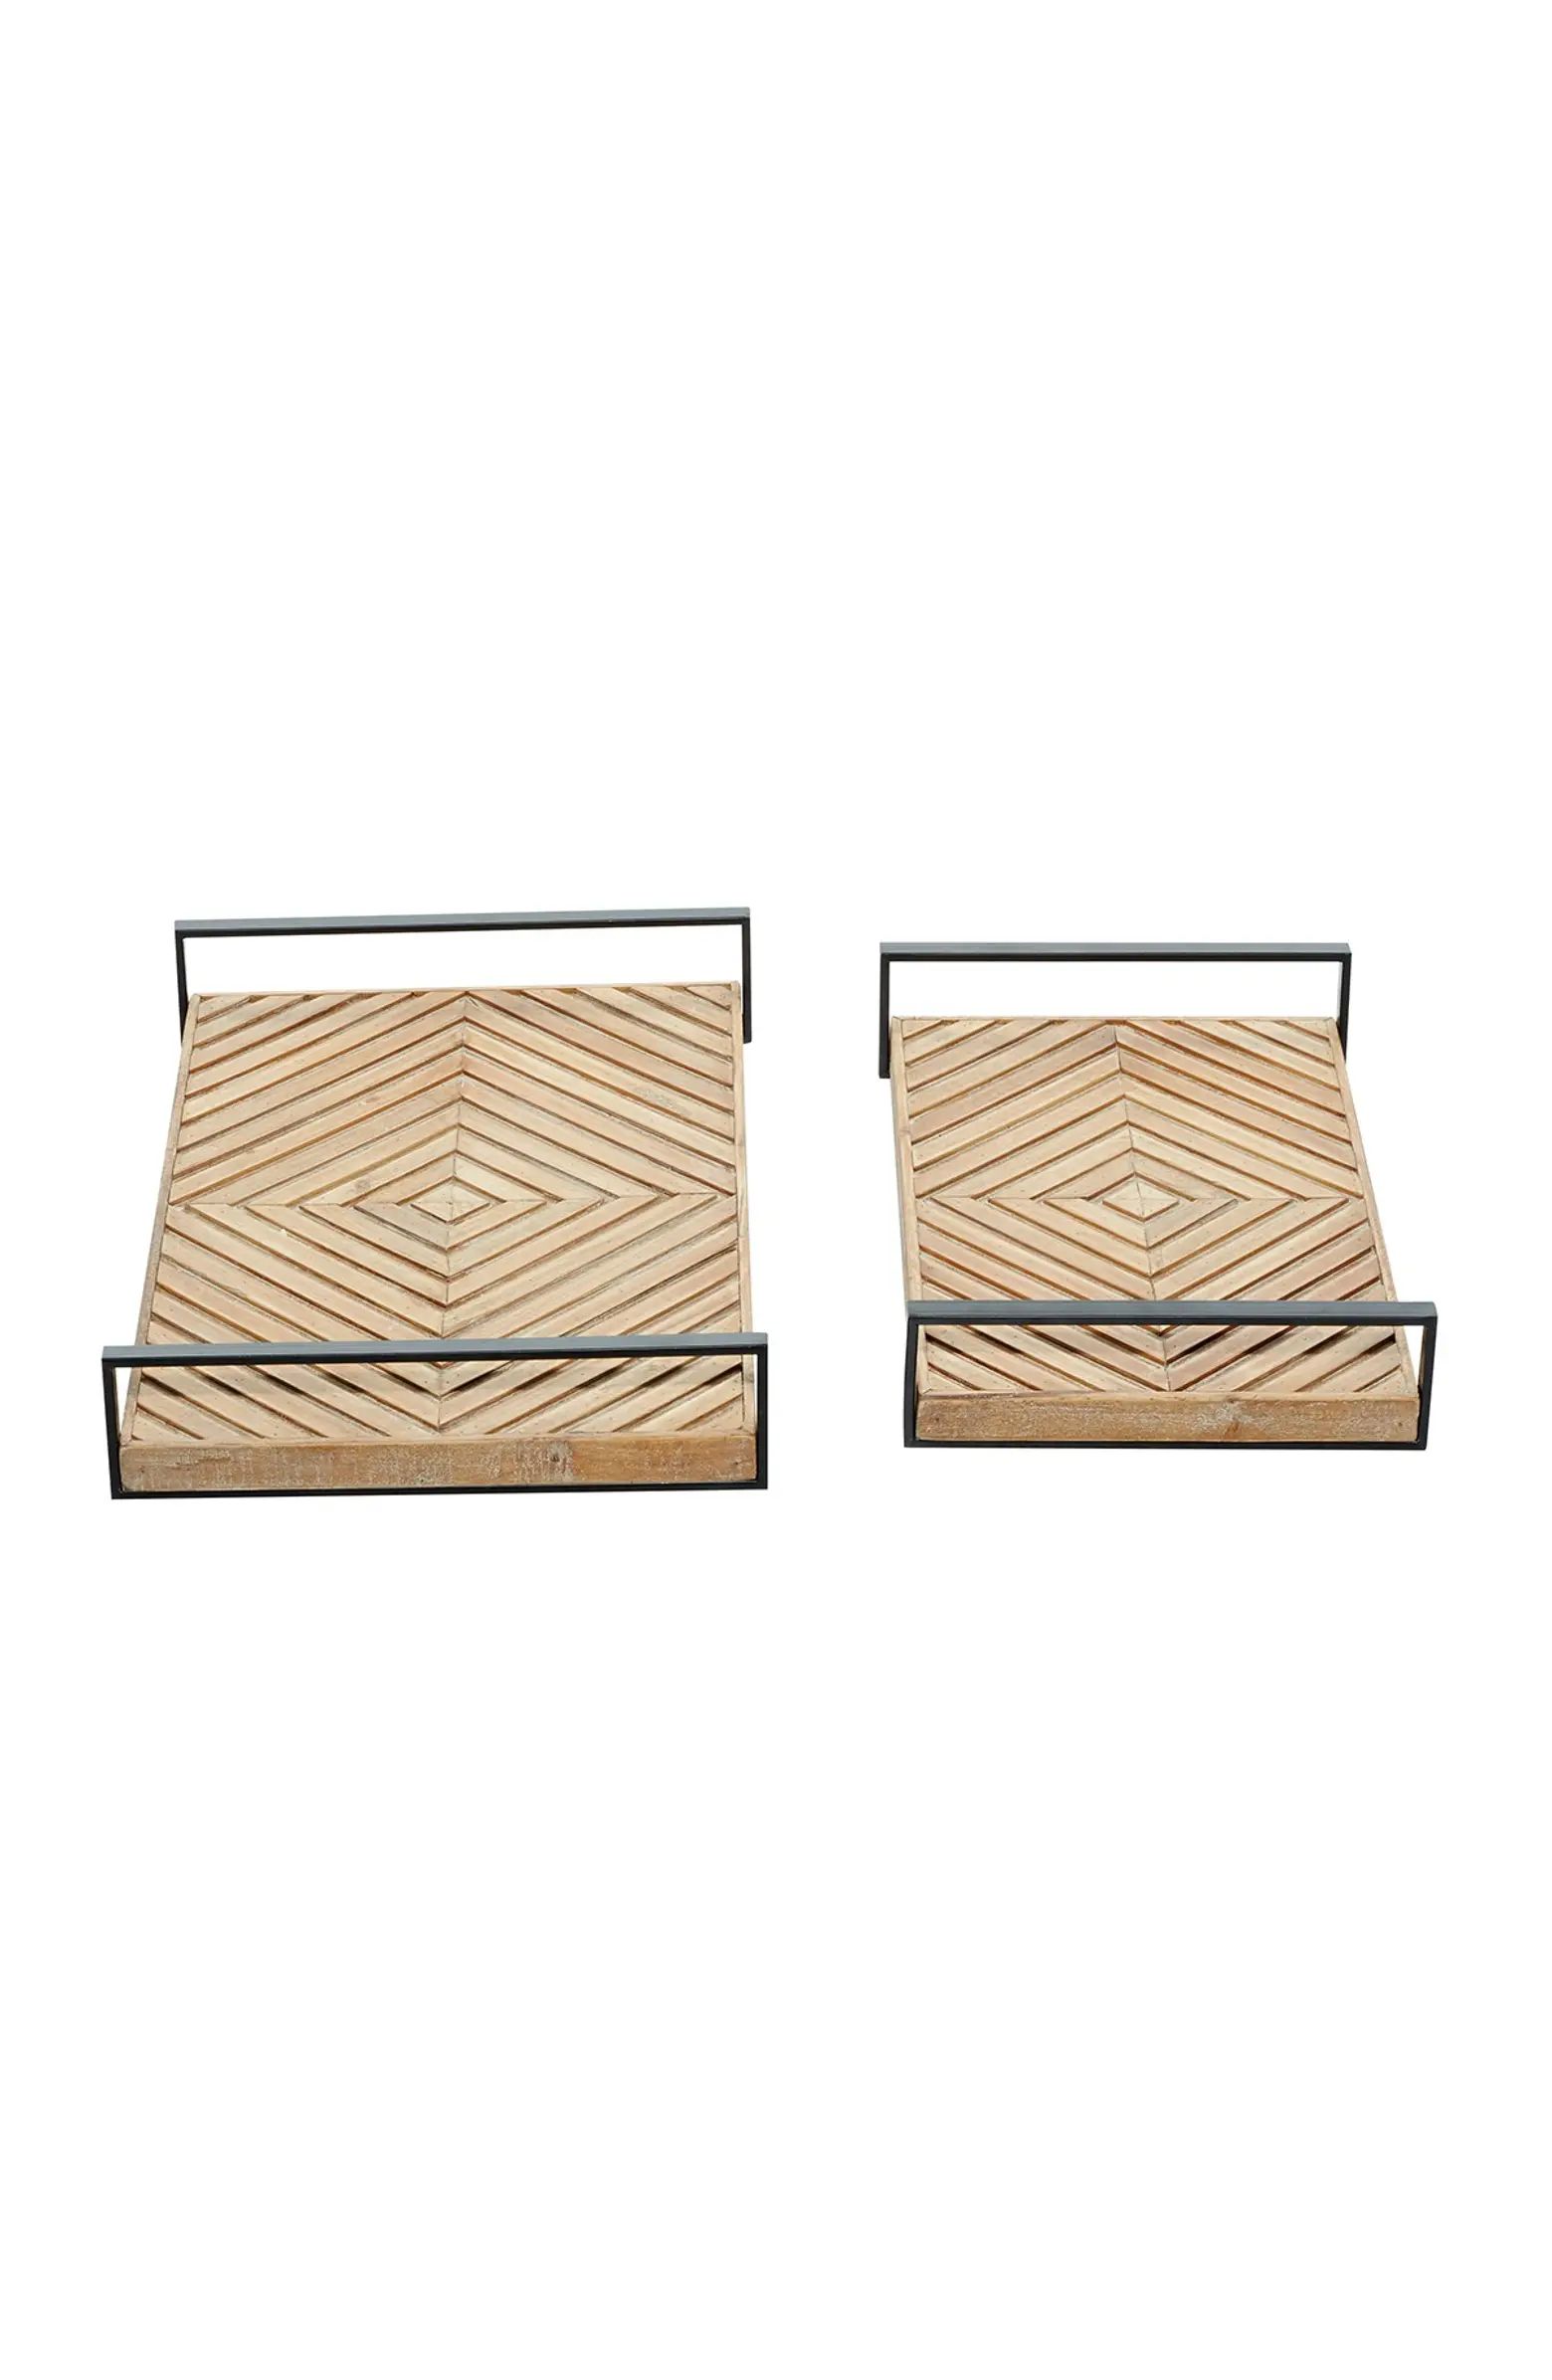 Brown Wood Diamond Pattern Tray with Black Handles - Set of 2 | Nordstrom Rack